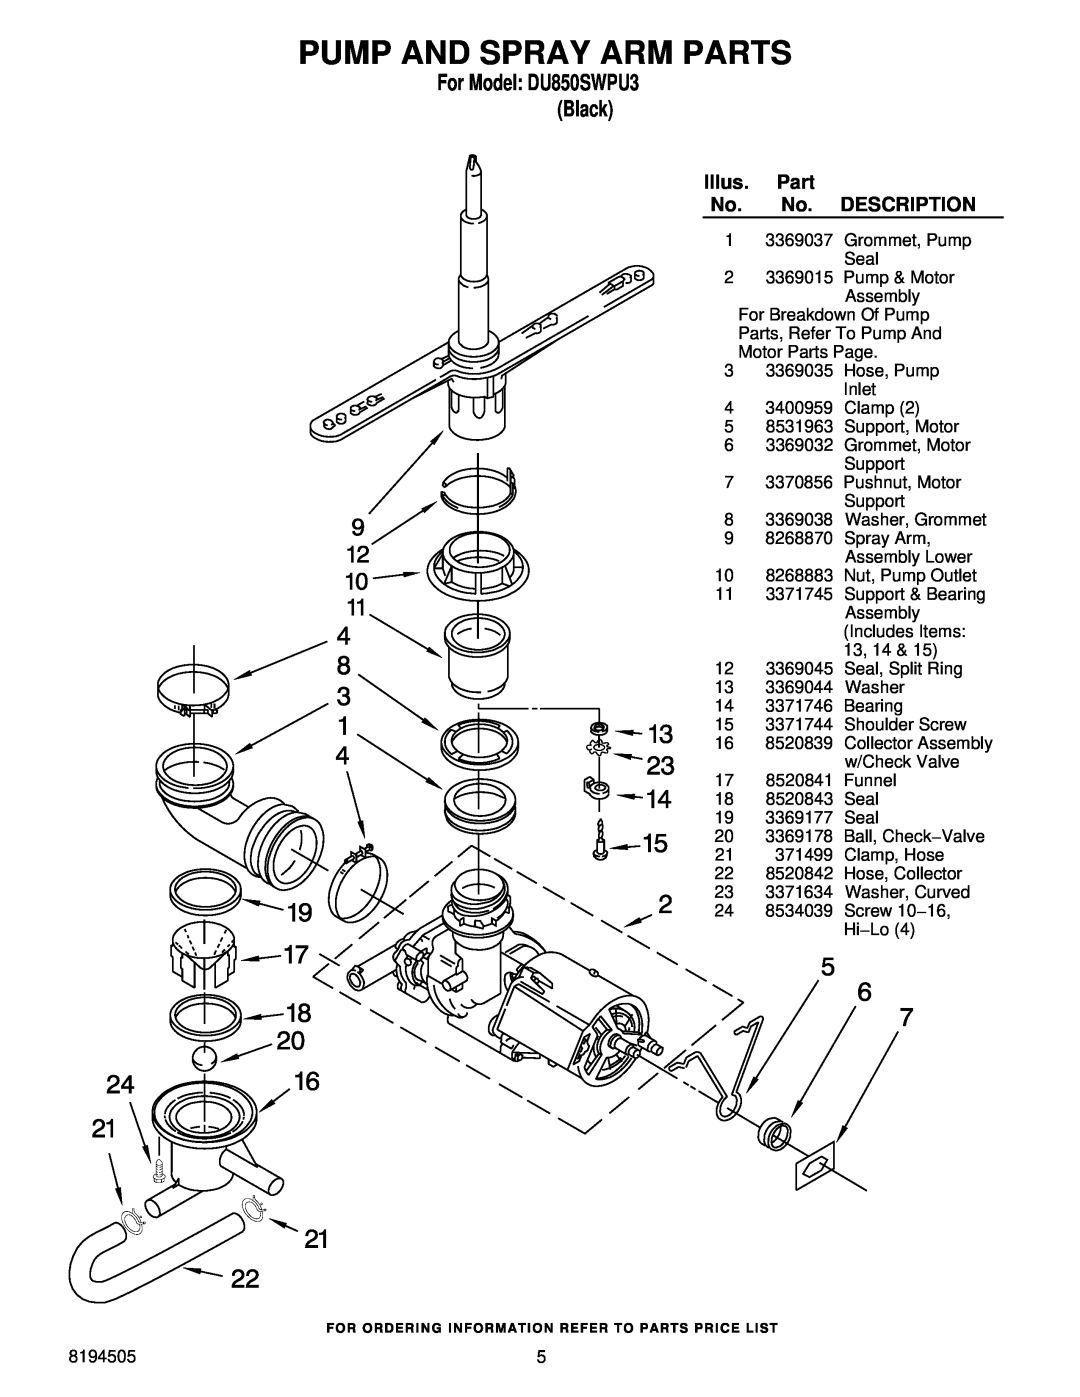 Whirlpool DU850SWPU3 manual Pump And Spray Arm Parts, Illus, Description 